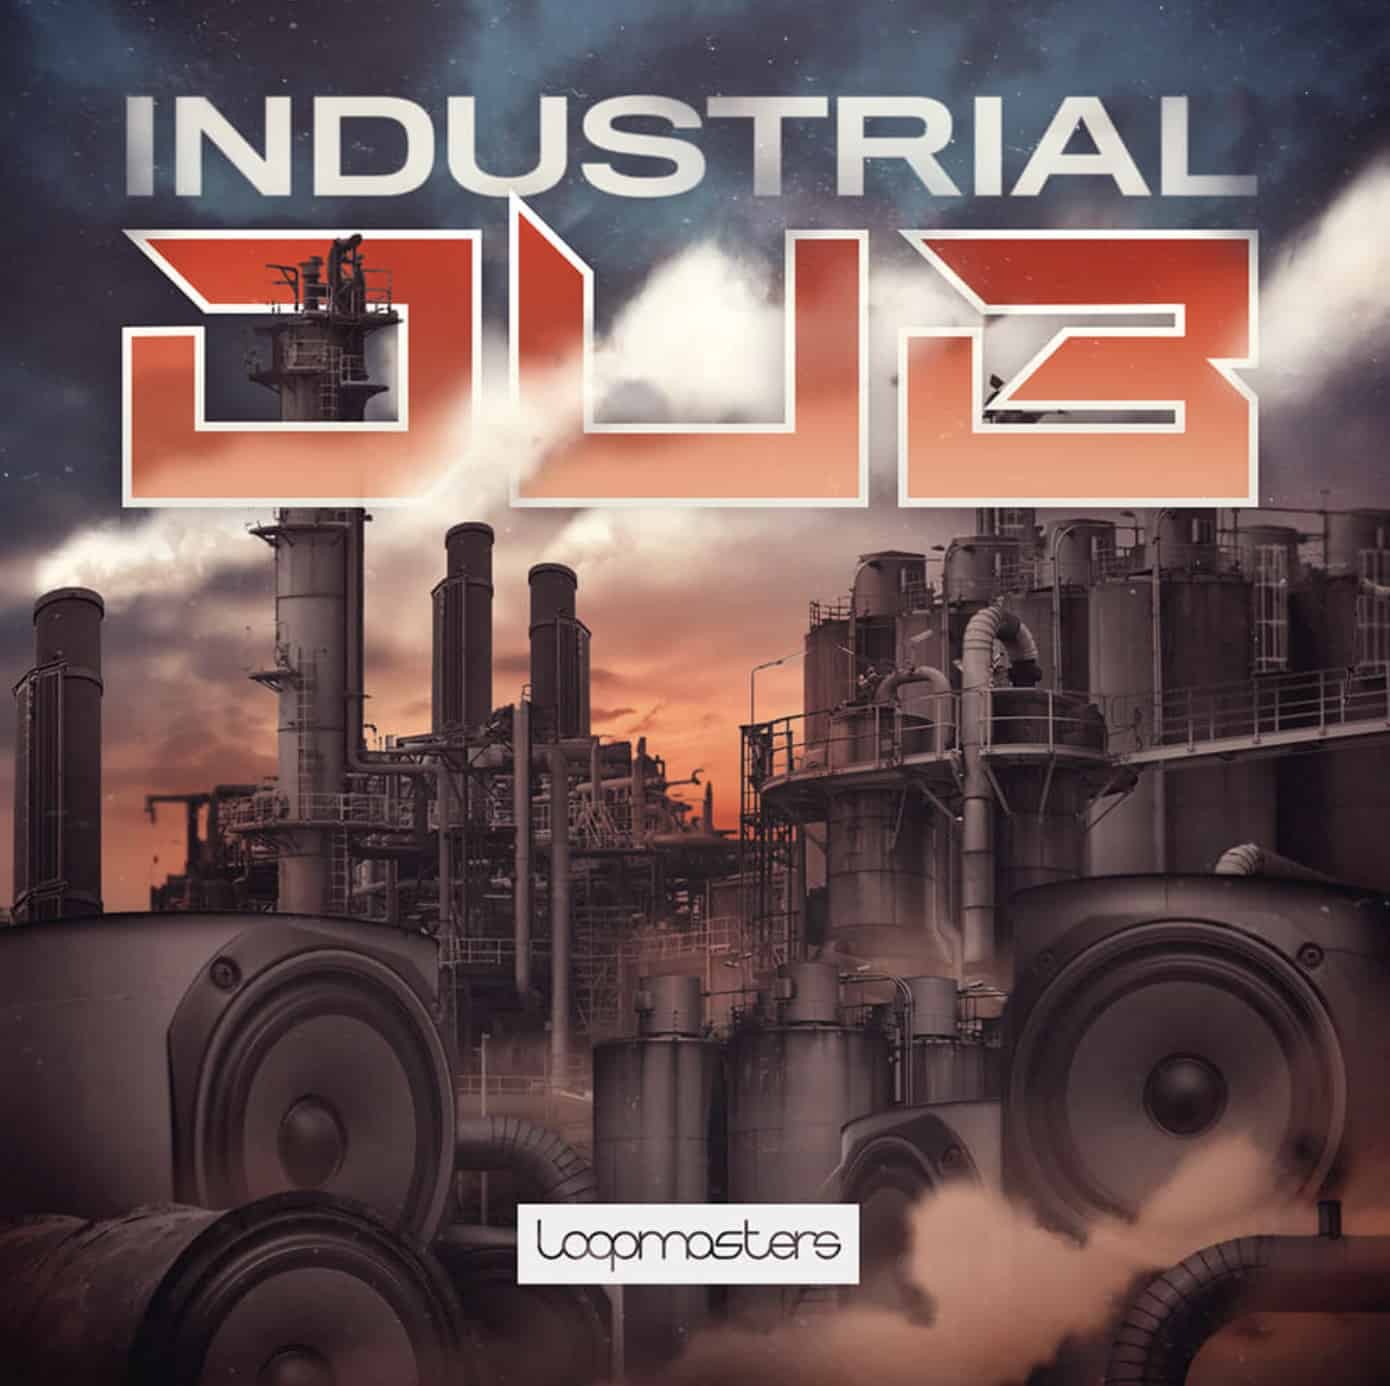 Industrial Dub by loopmasters